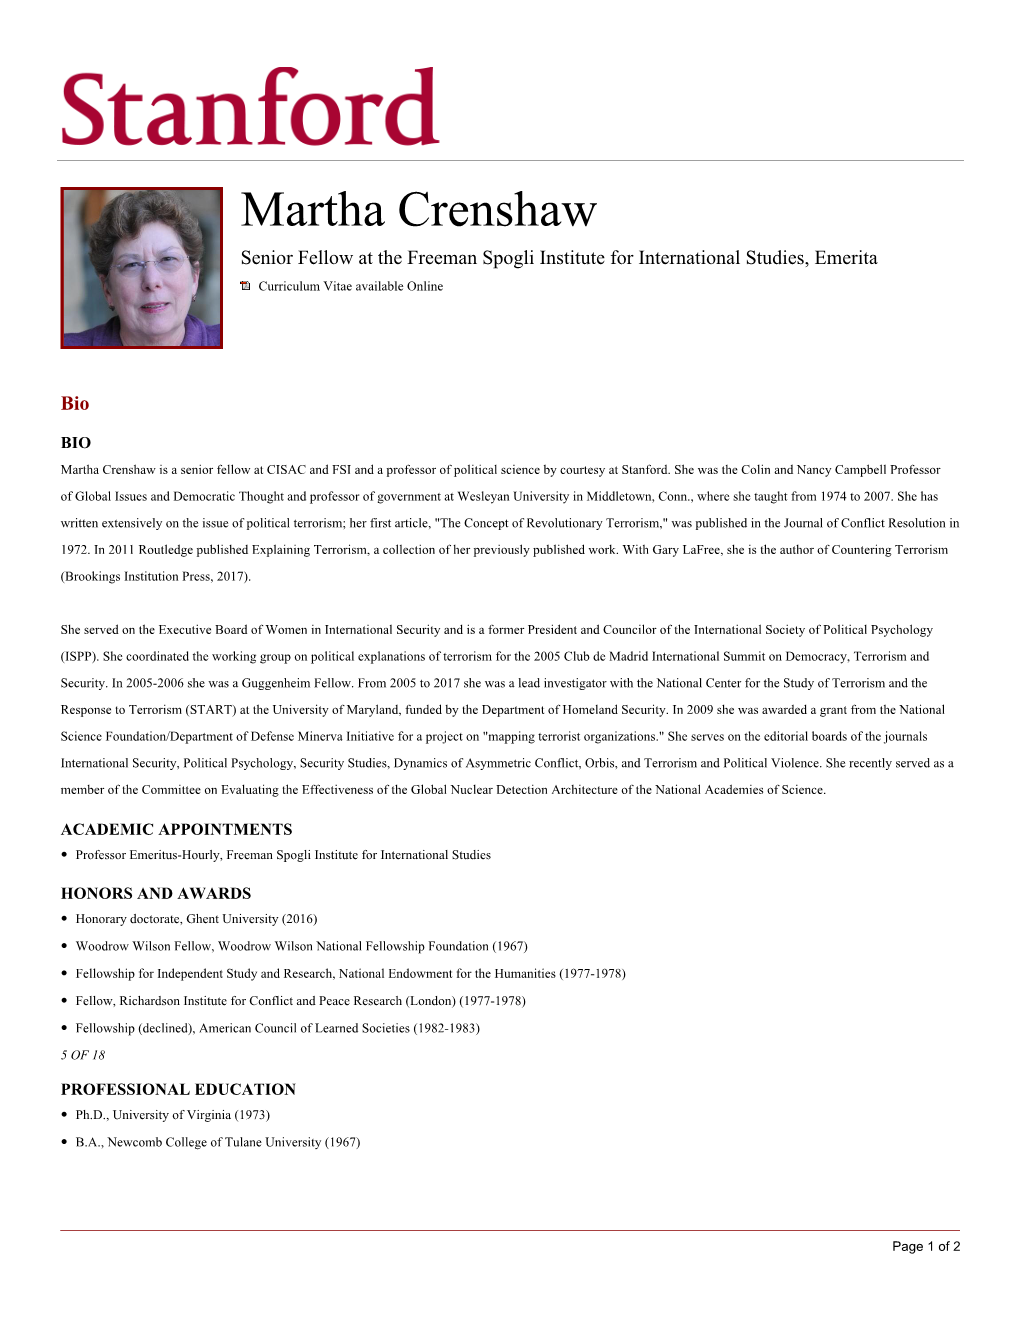 Martha Crenshaw Senior Fellow at the Freeman Spogli Institute for International Studies, Emerita Curriculum Vitae Available Online